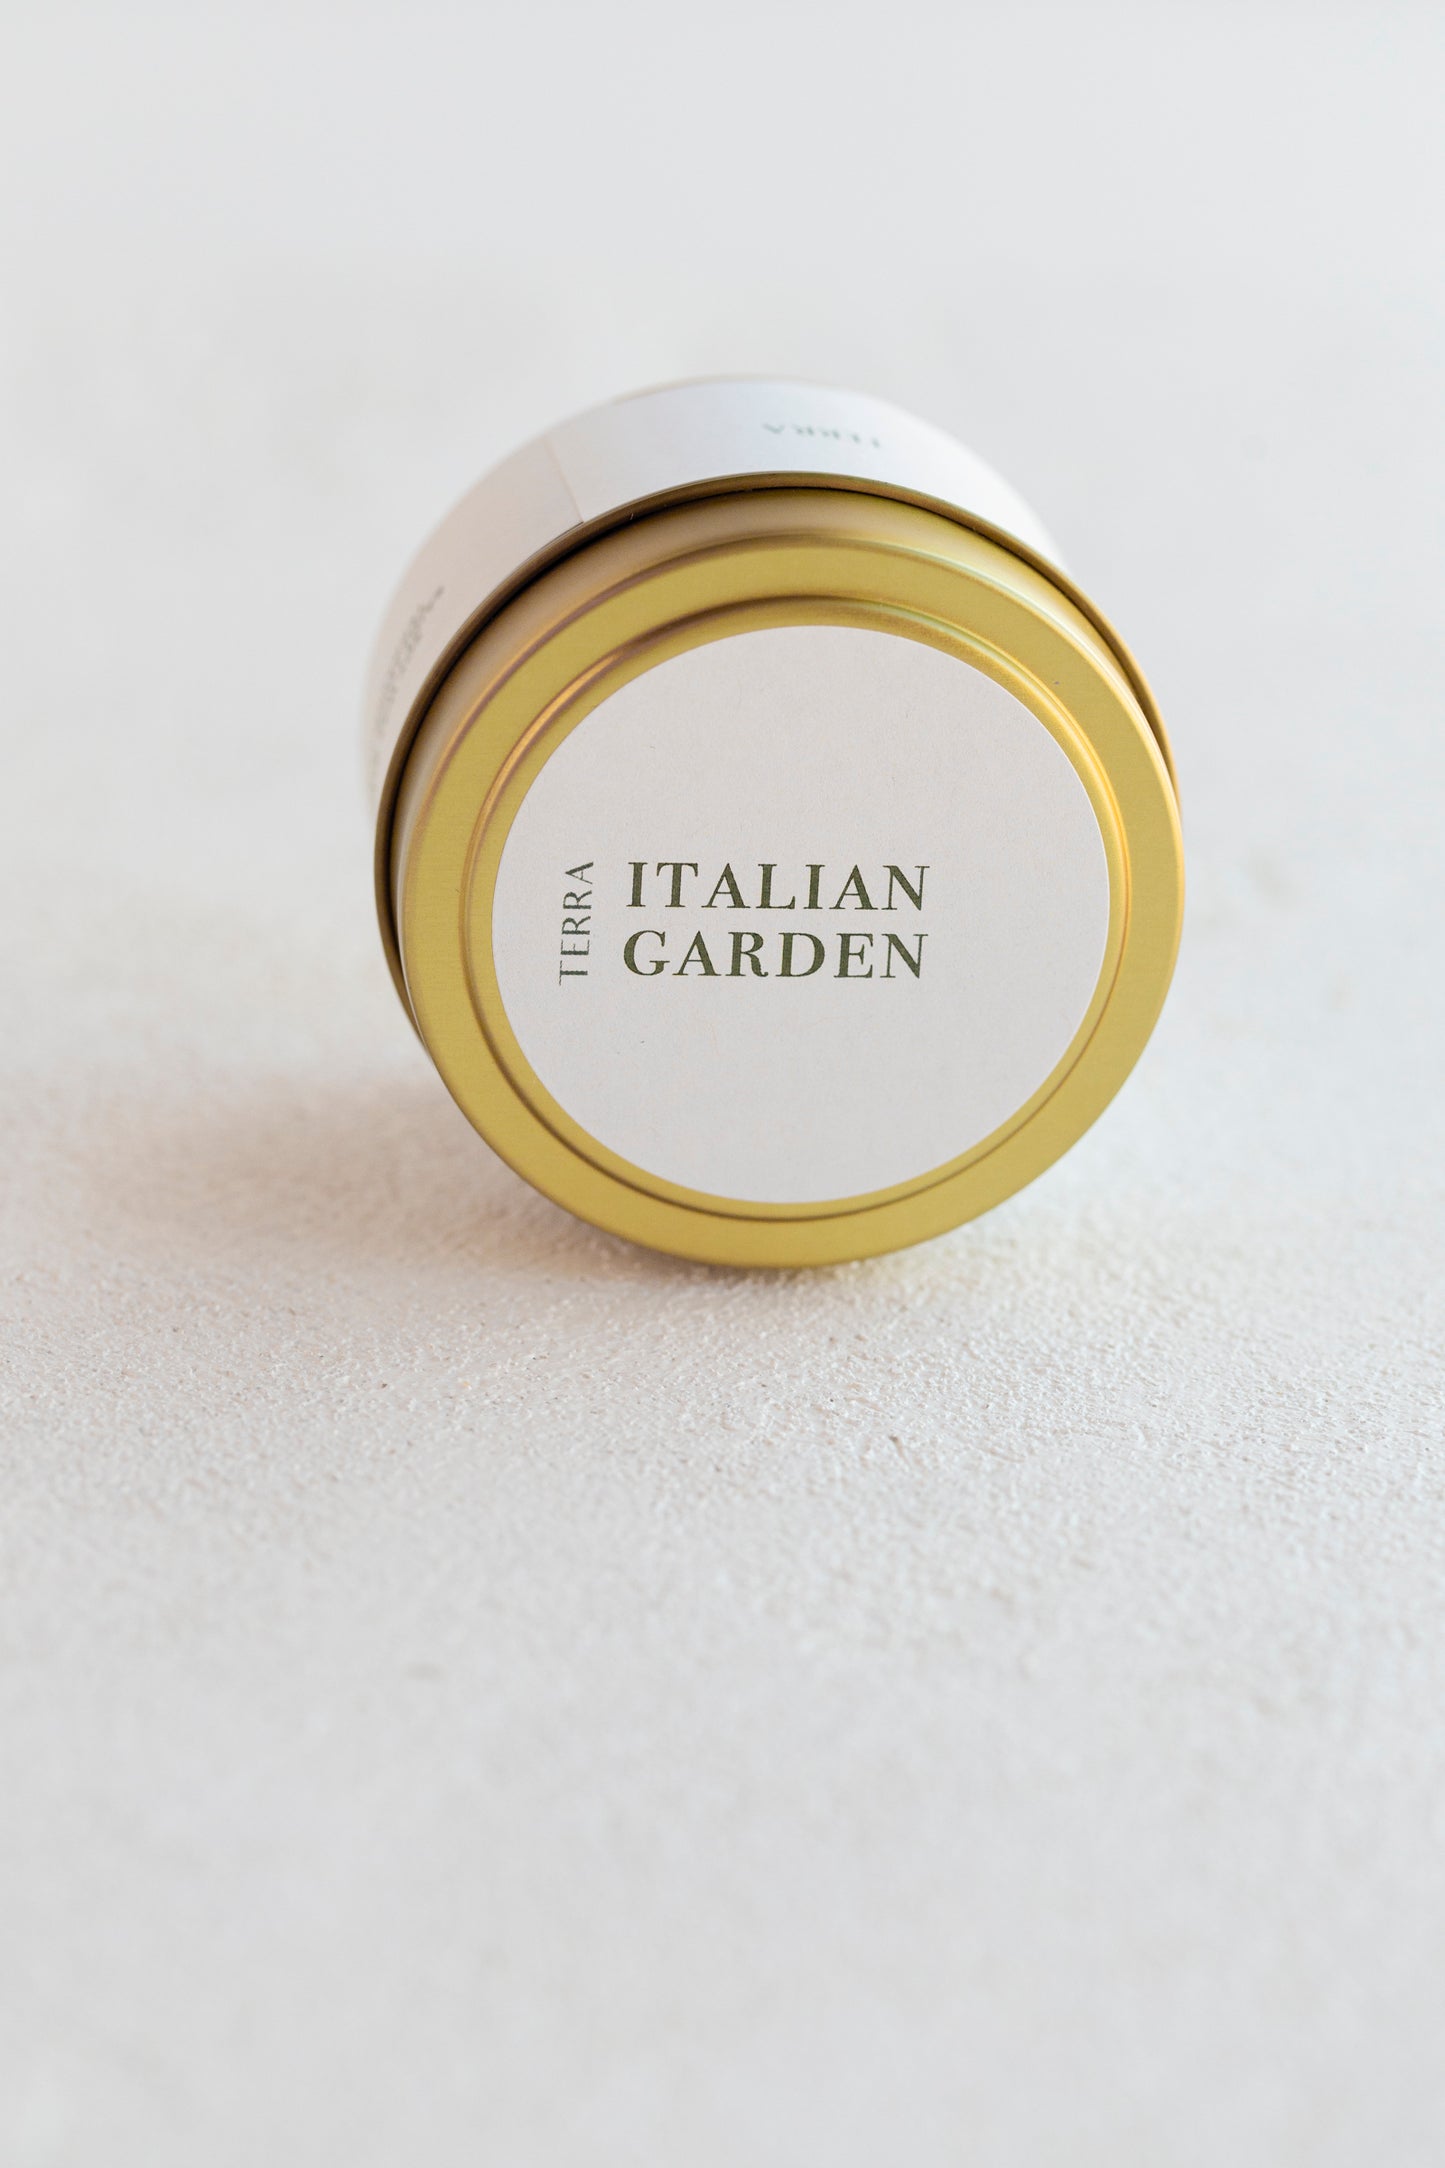 Italian Garden Mini Candle